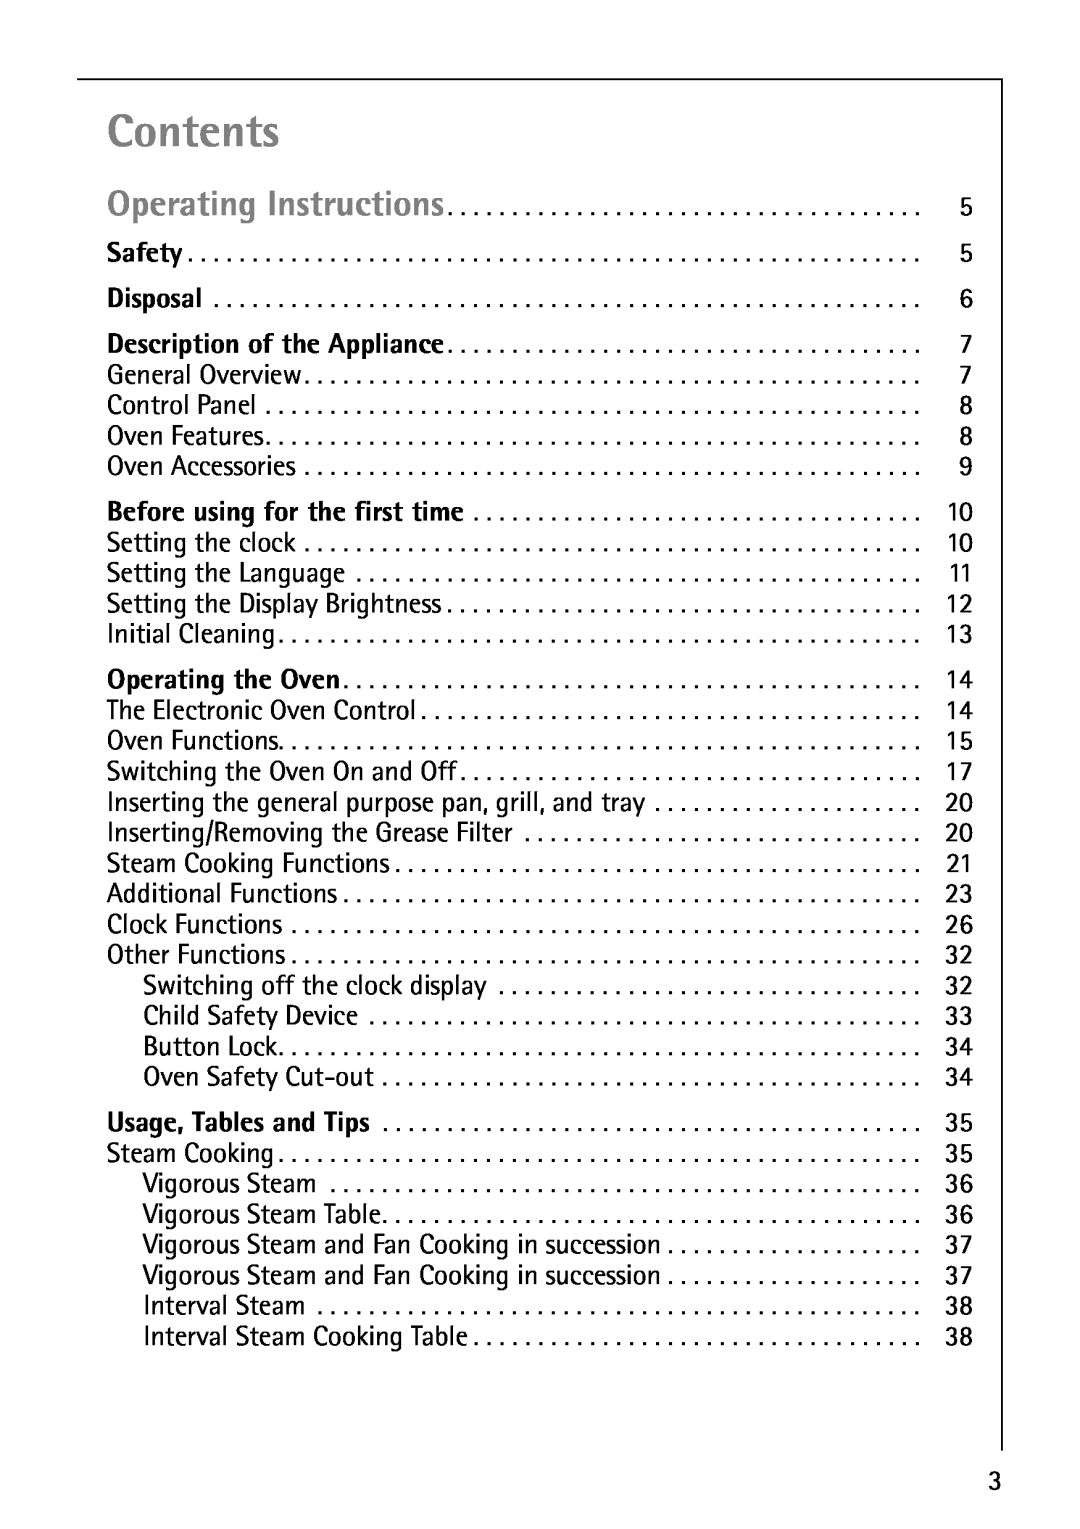 AEG B8920-1 manual Contents 